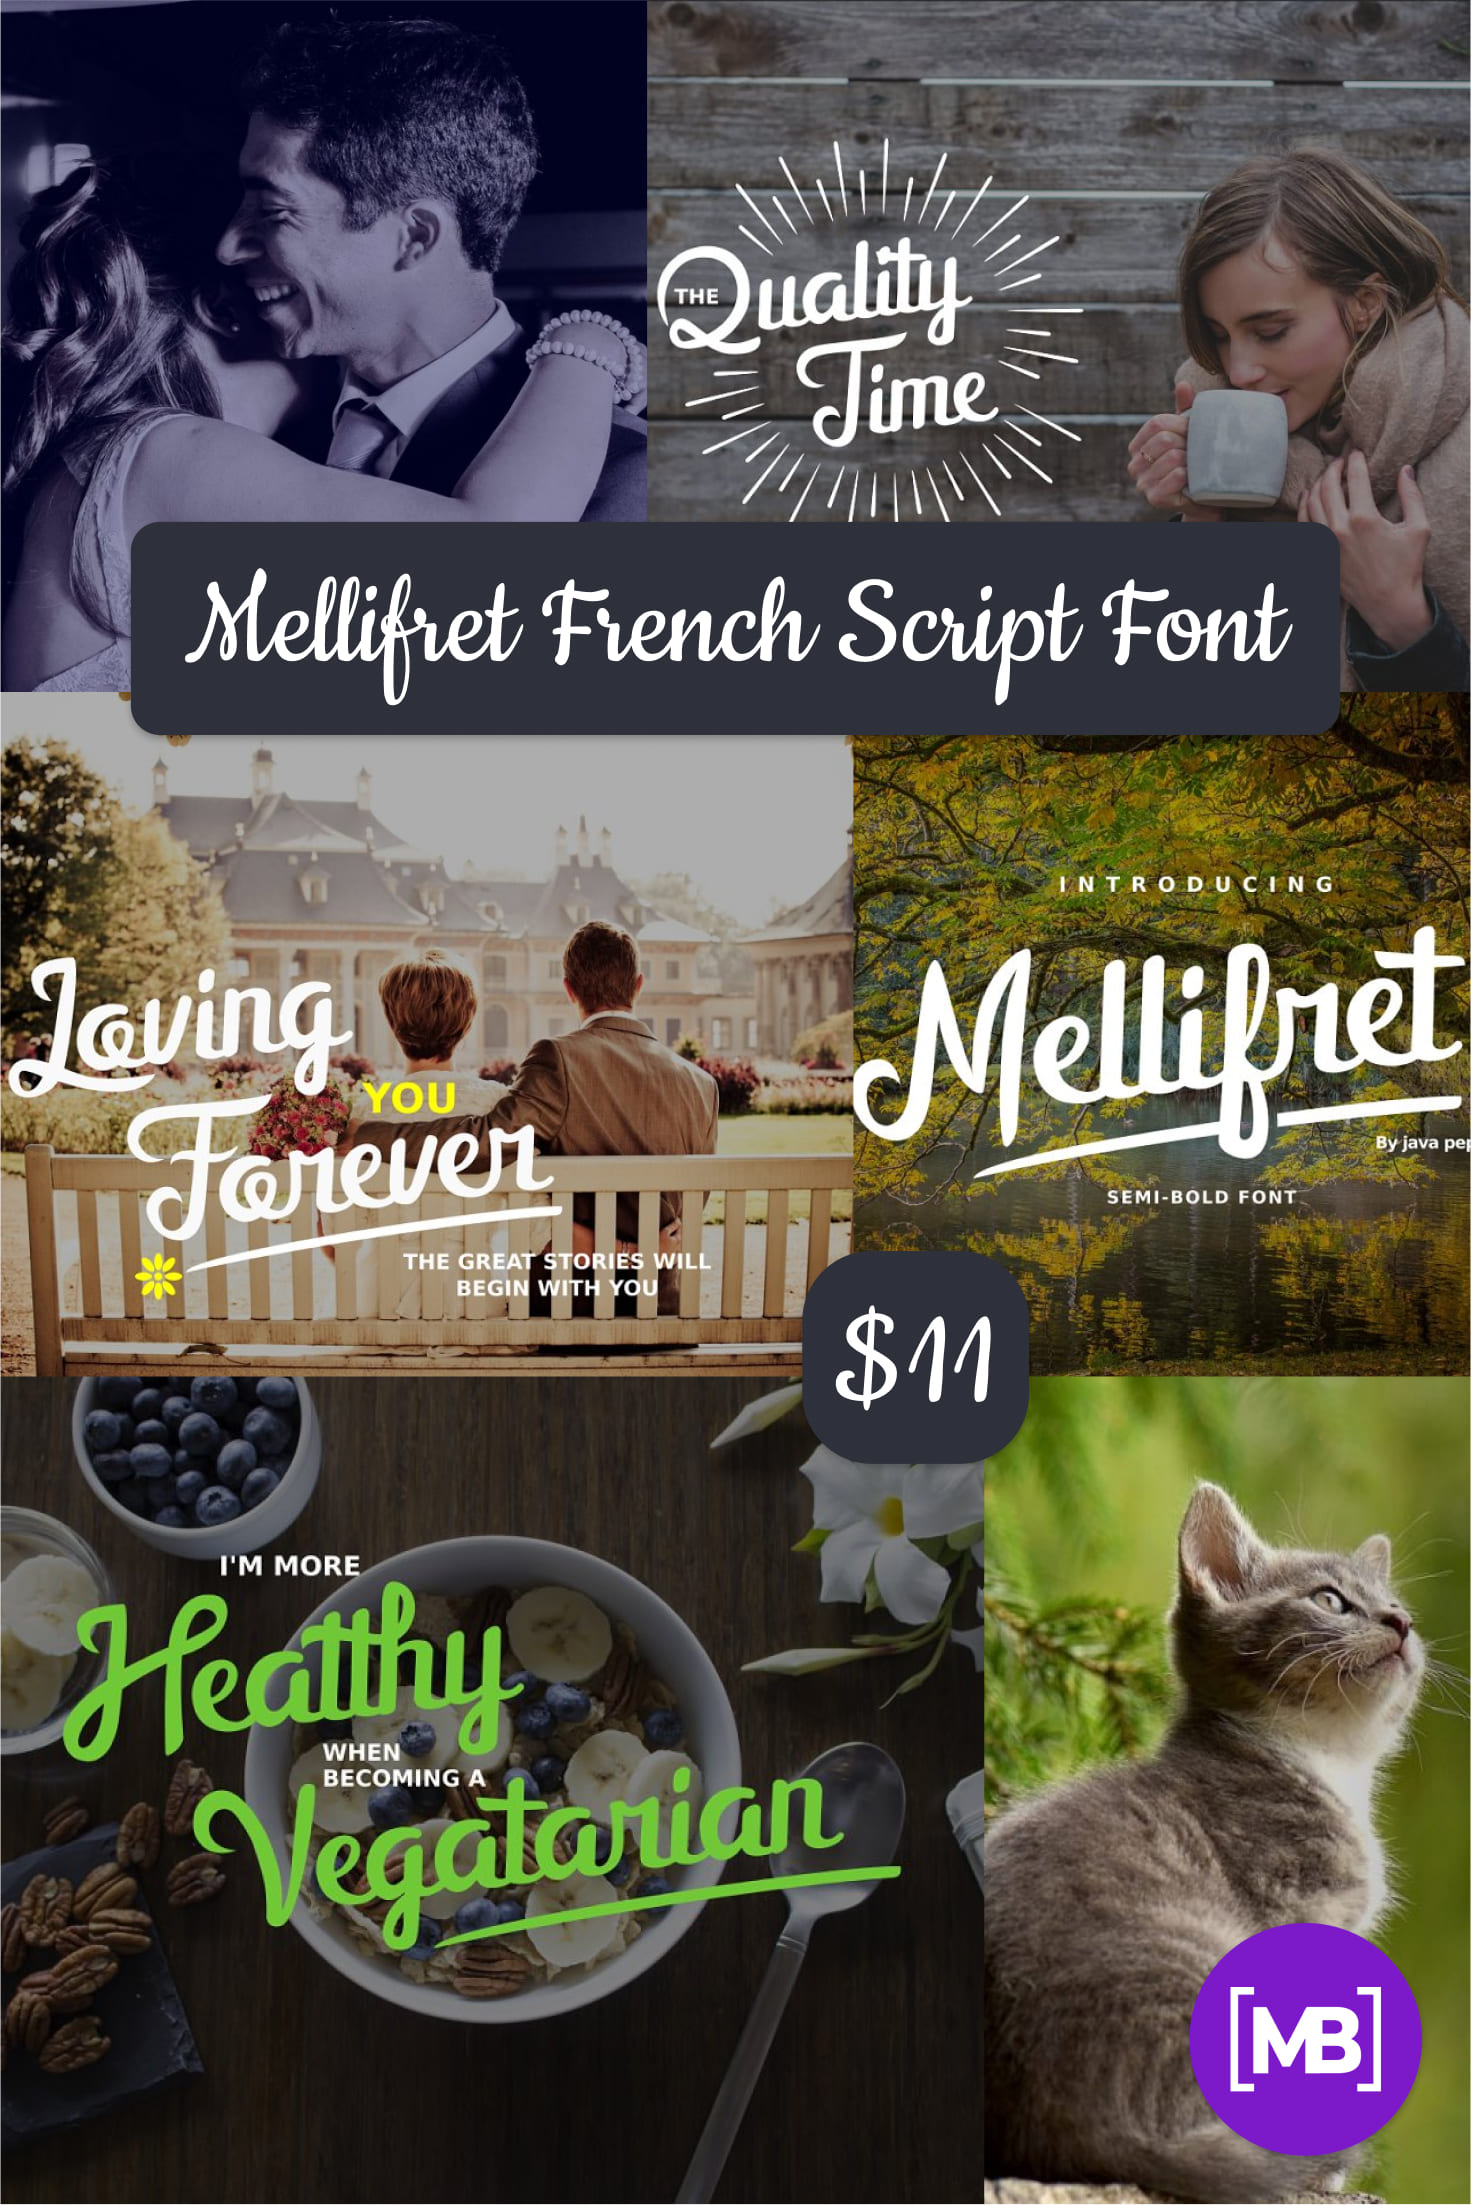 Pinterest Image: Mellifret French Script Font.